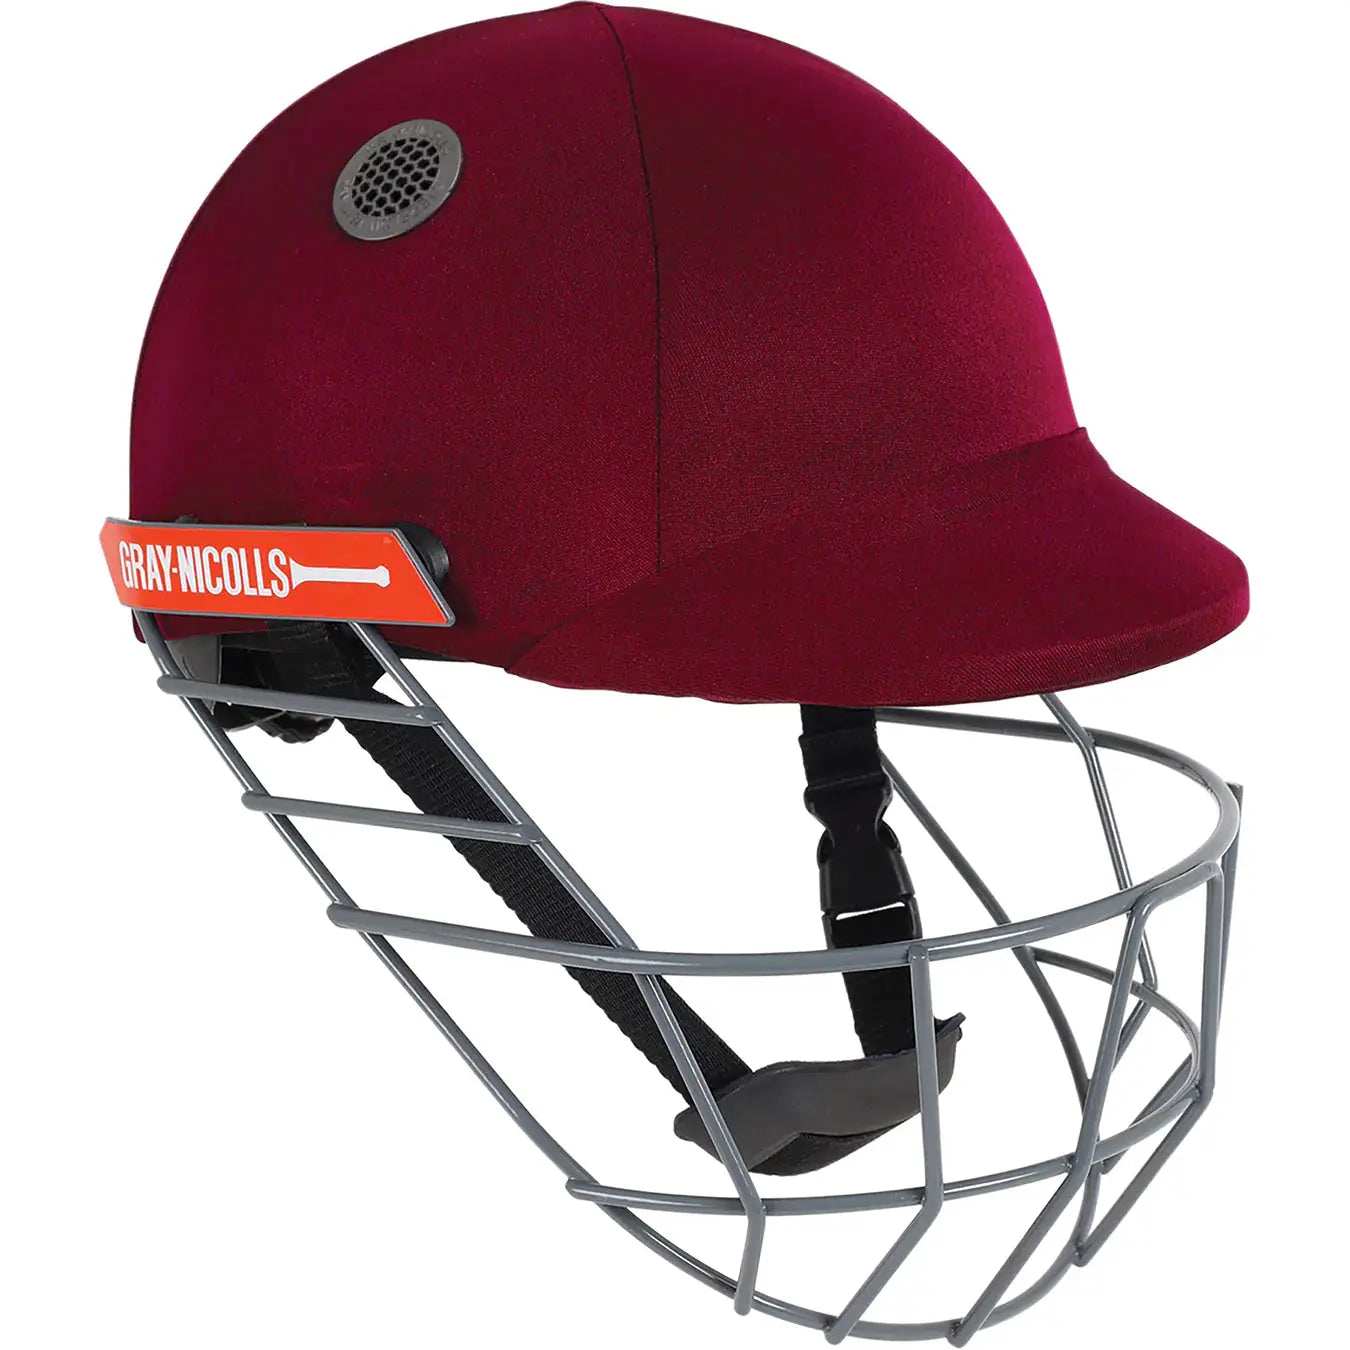 Gray Nicolls Atomic Cricket Helmet - Lightweight Maximum Protection - Medium / Maroon - HELMETS & HEADGEAR